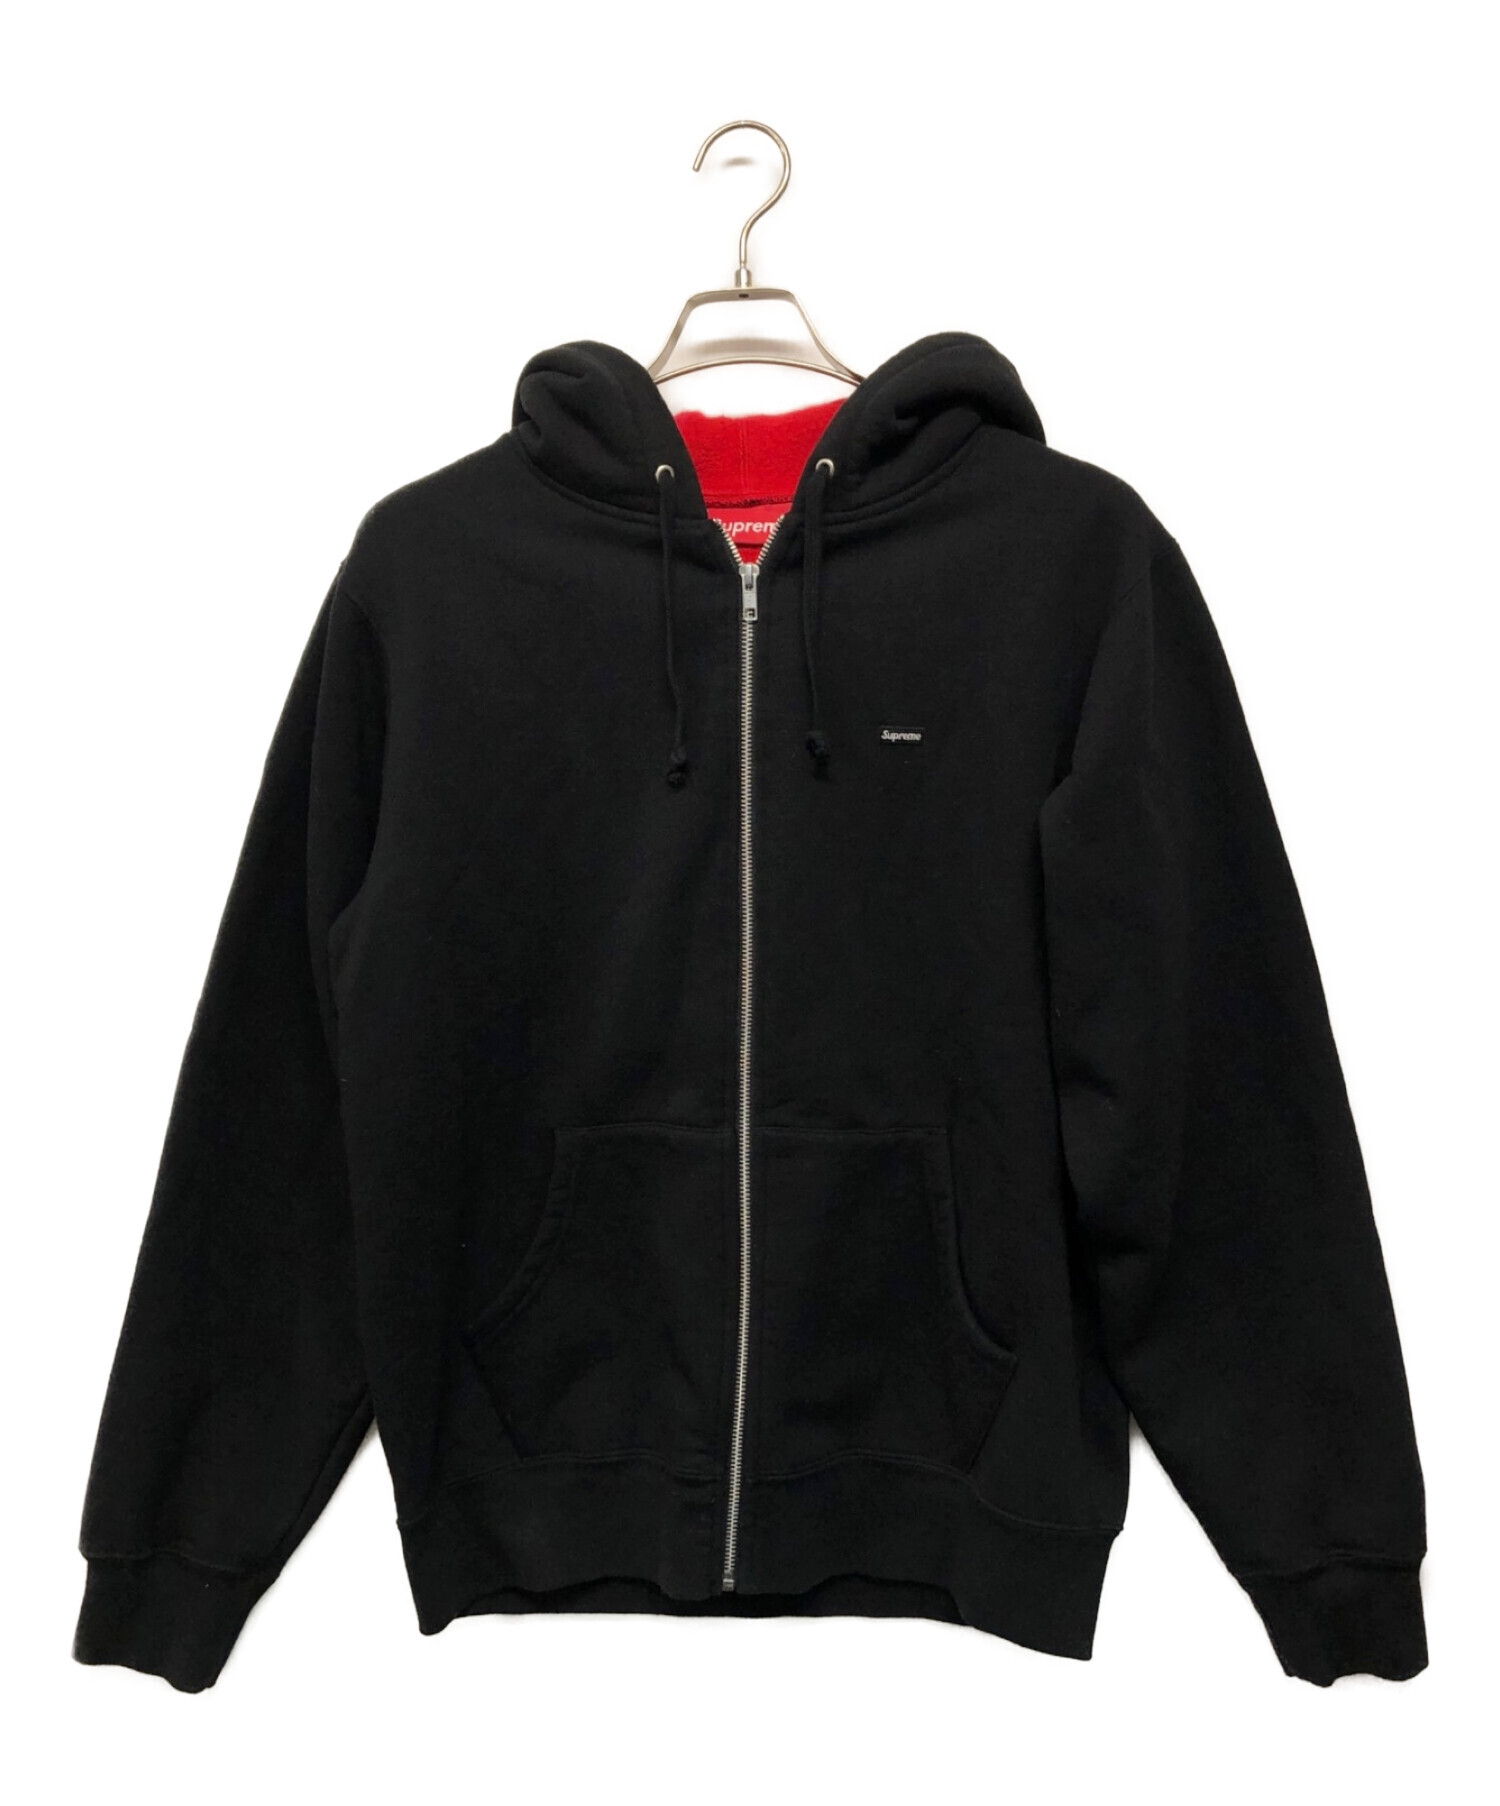 supreme contrast zip up hoodie M